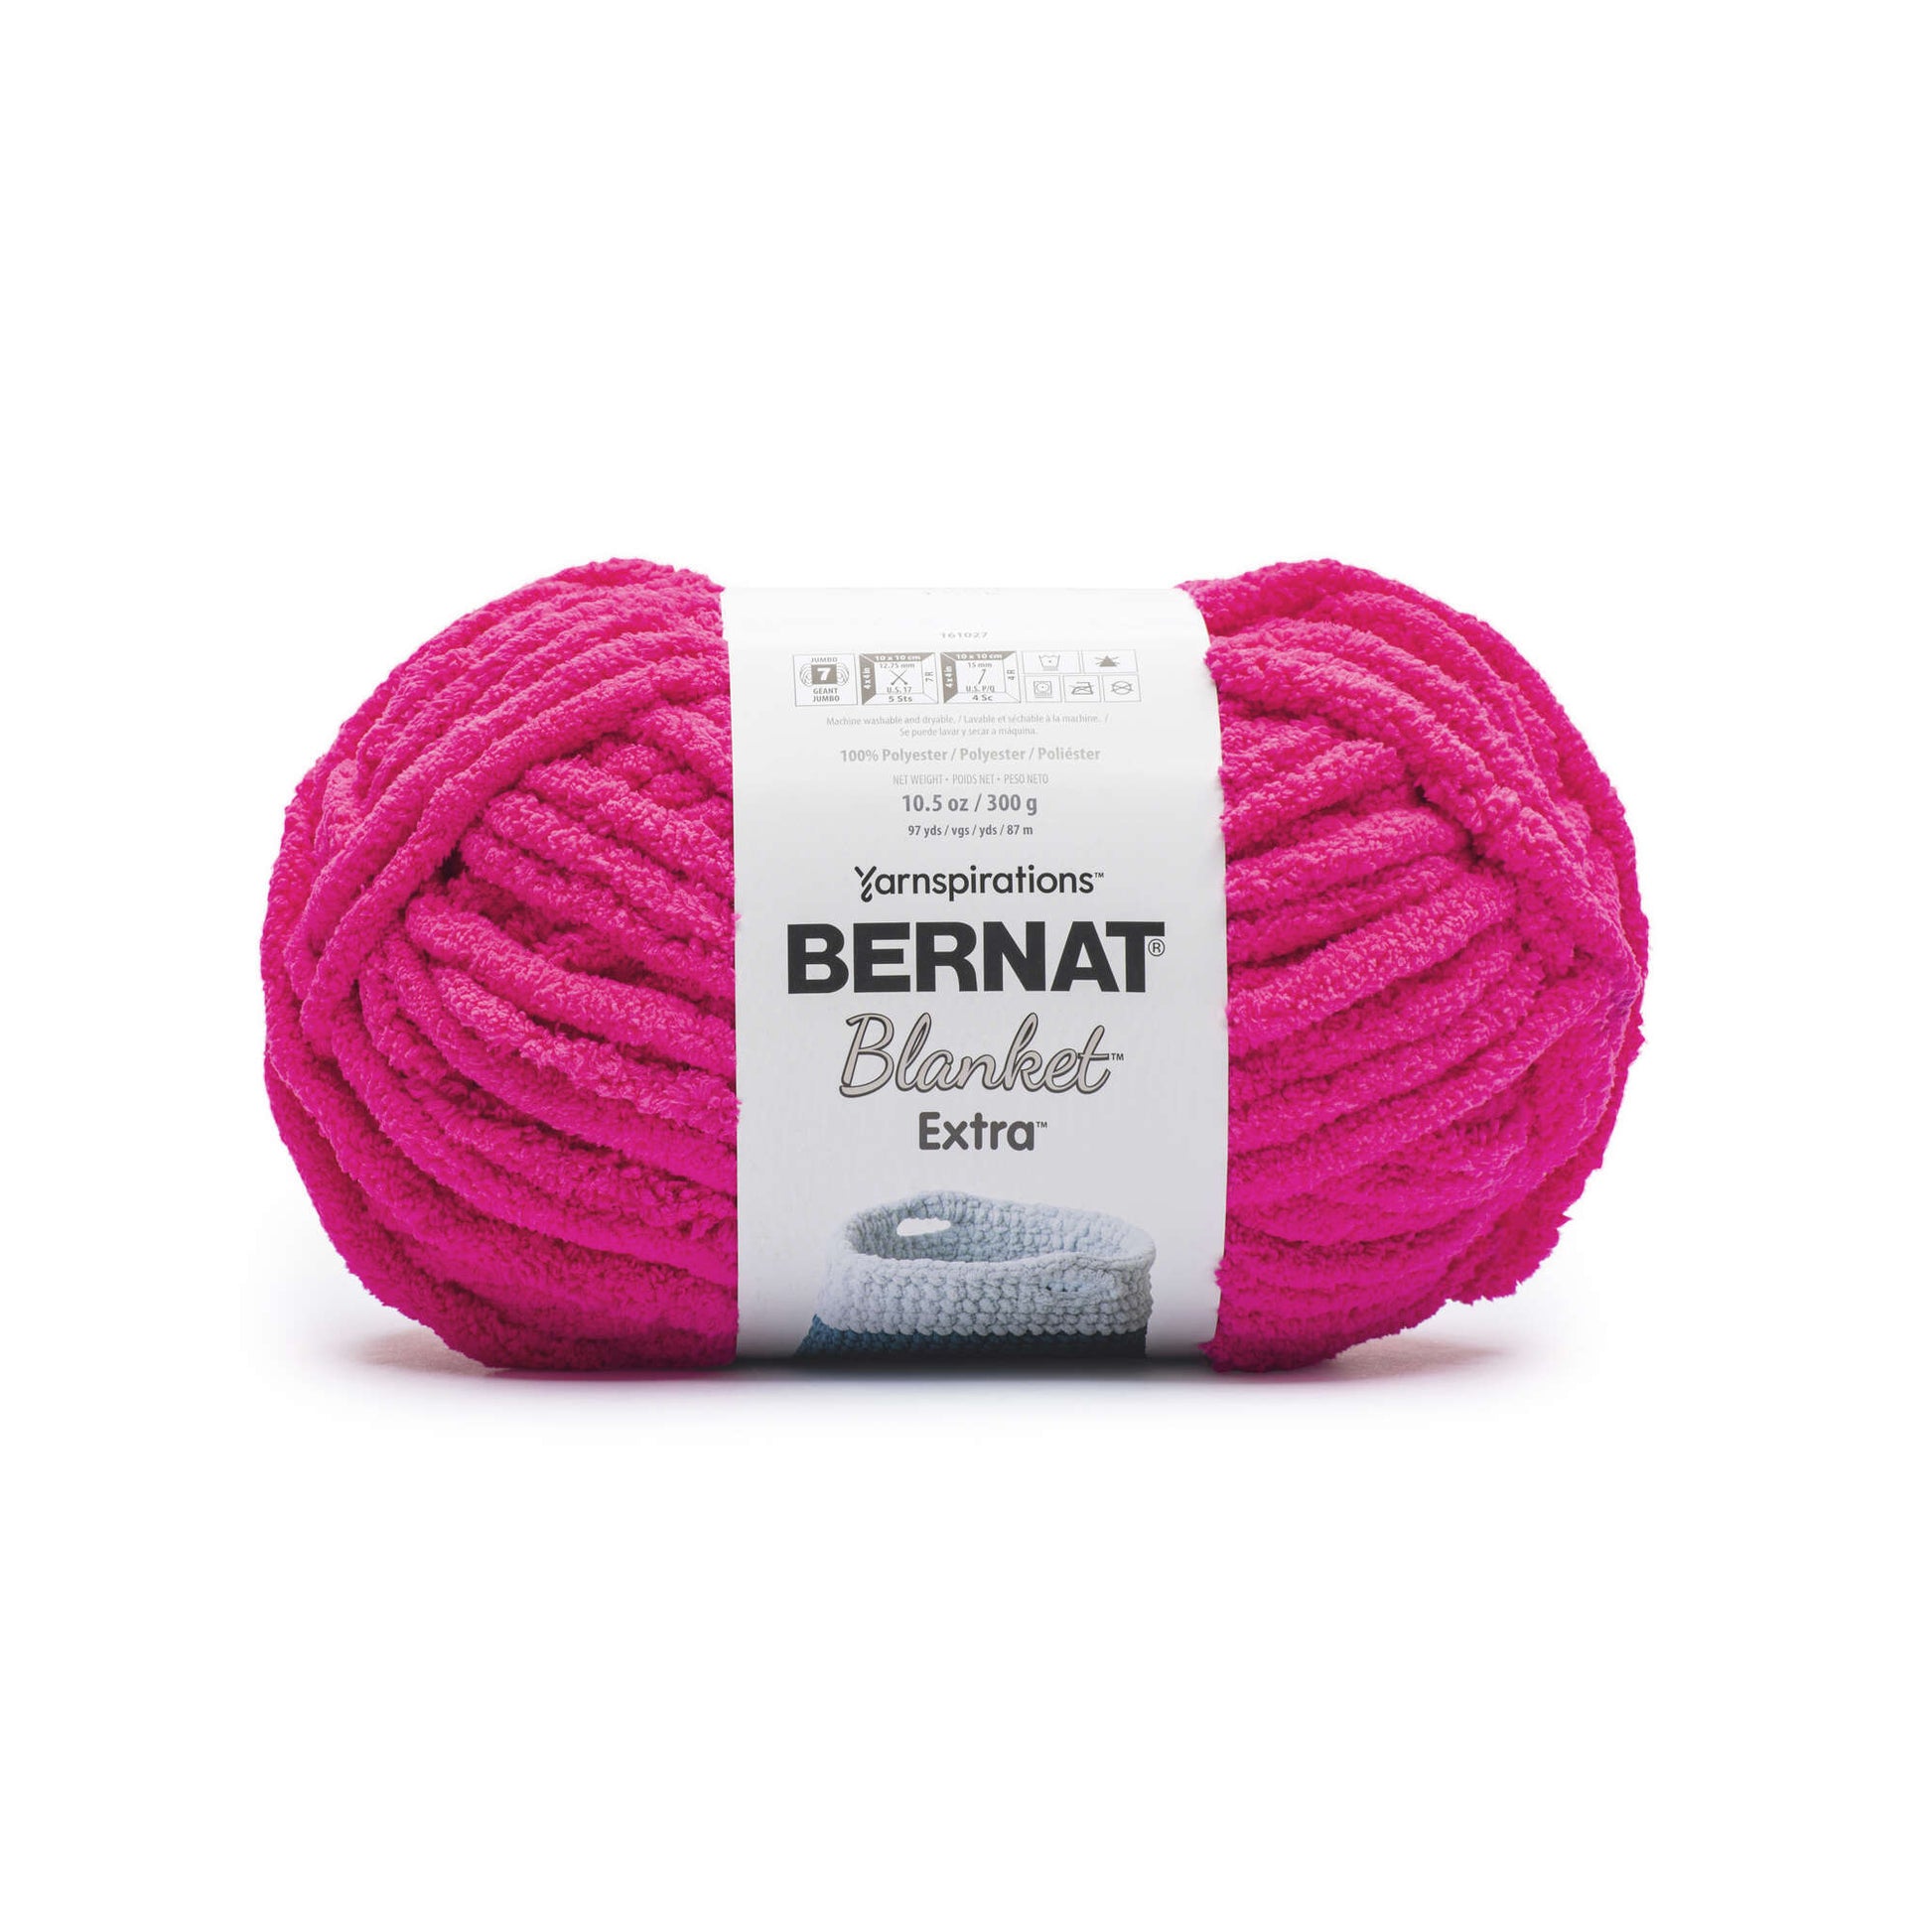 Bernat Blanket Extra Yarn (300g/10.5oz) Bright Pink